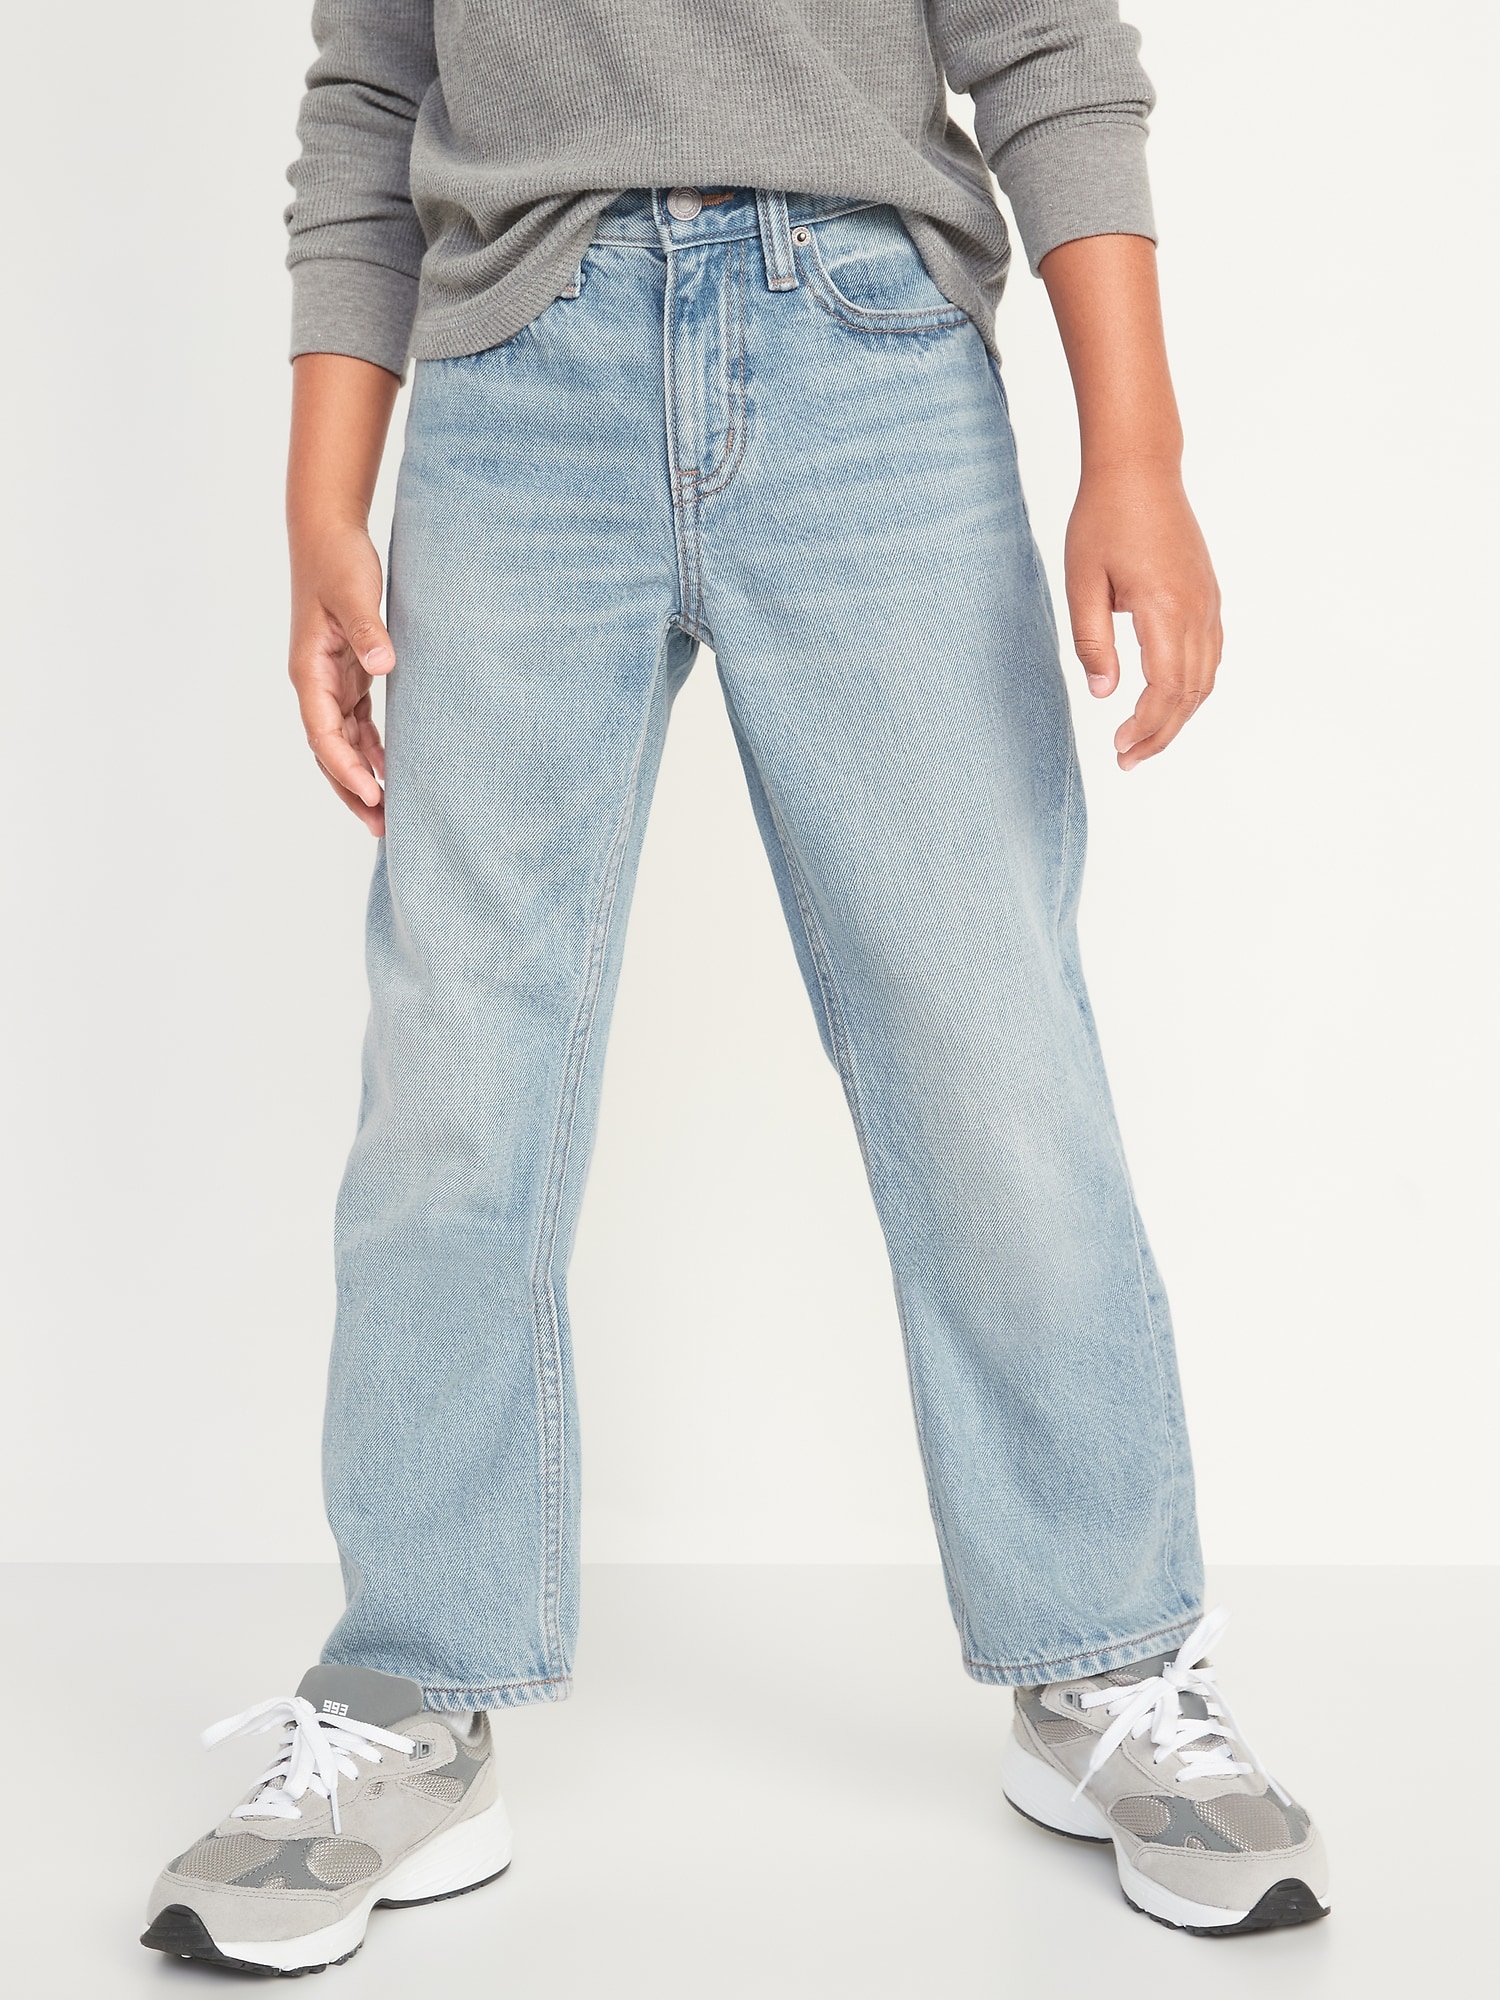 Teen Loose Jeans